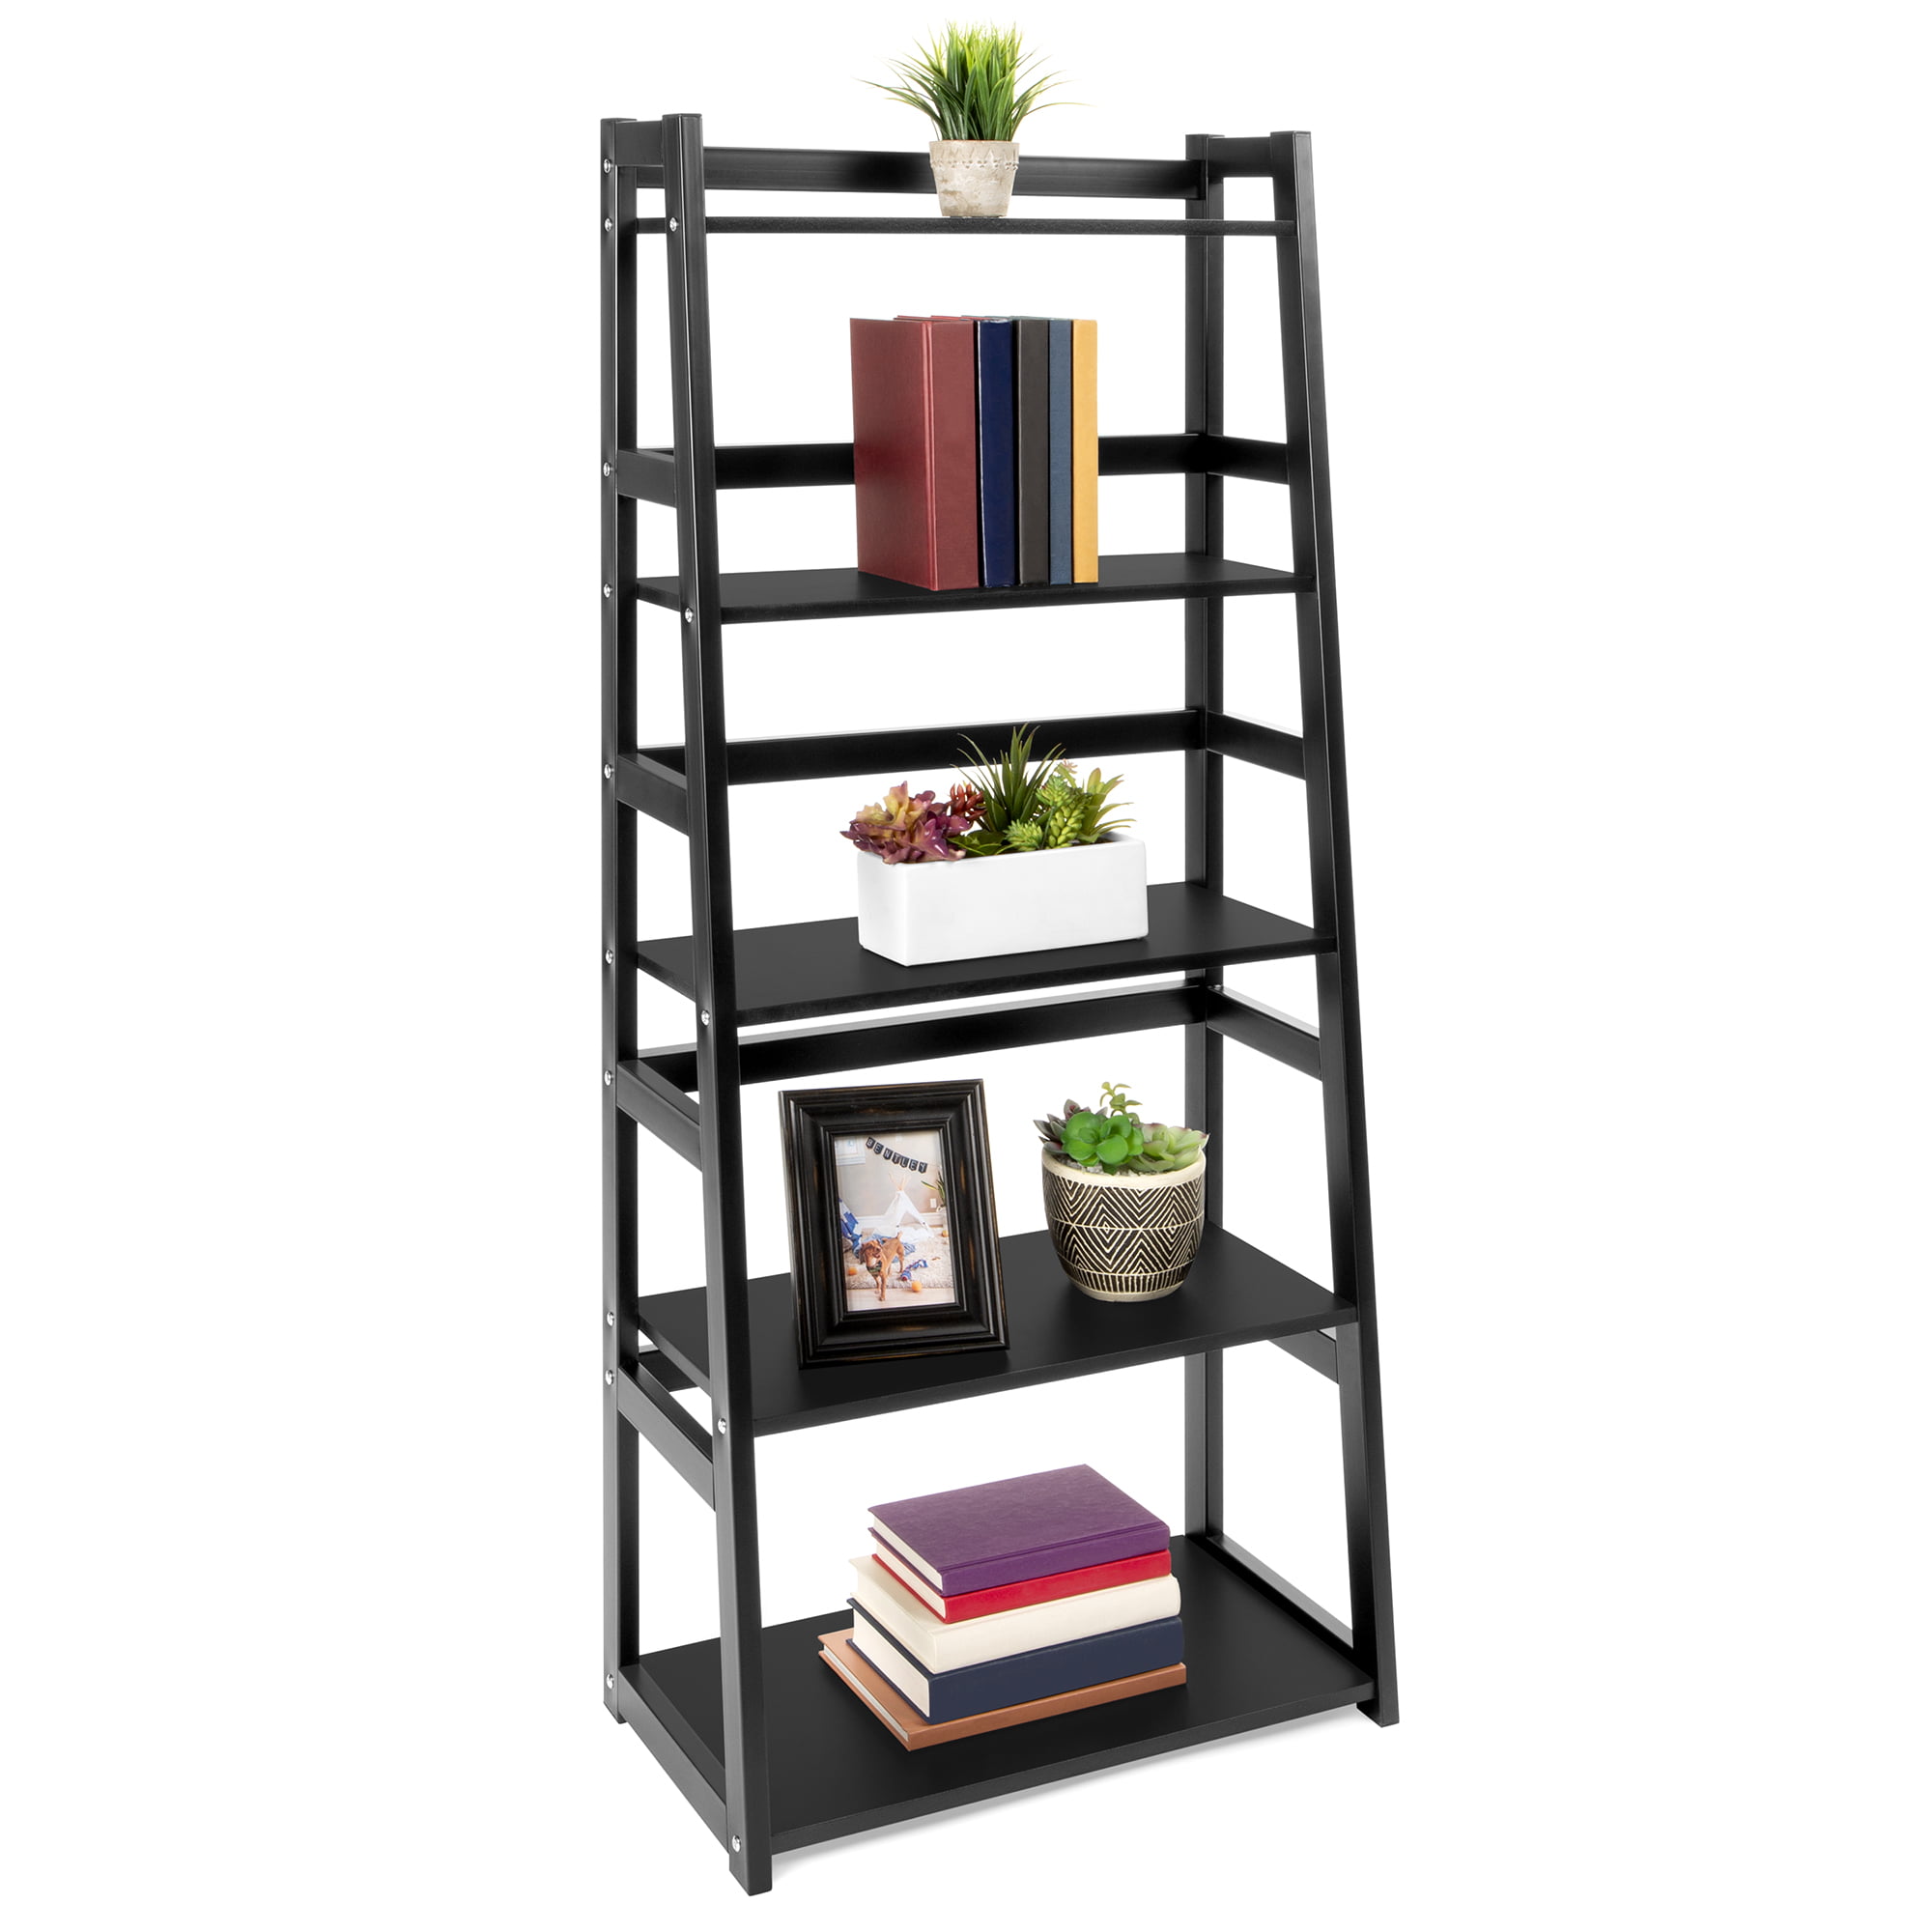 black book shelves